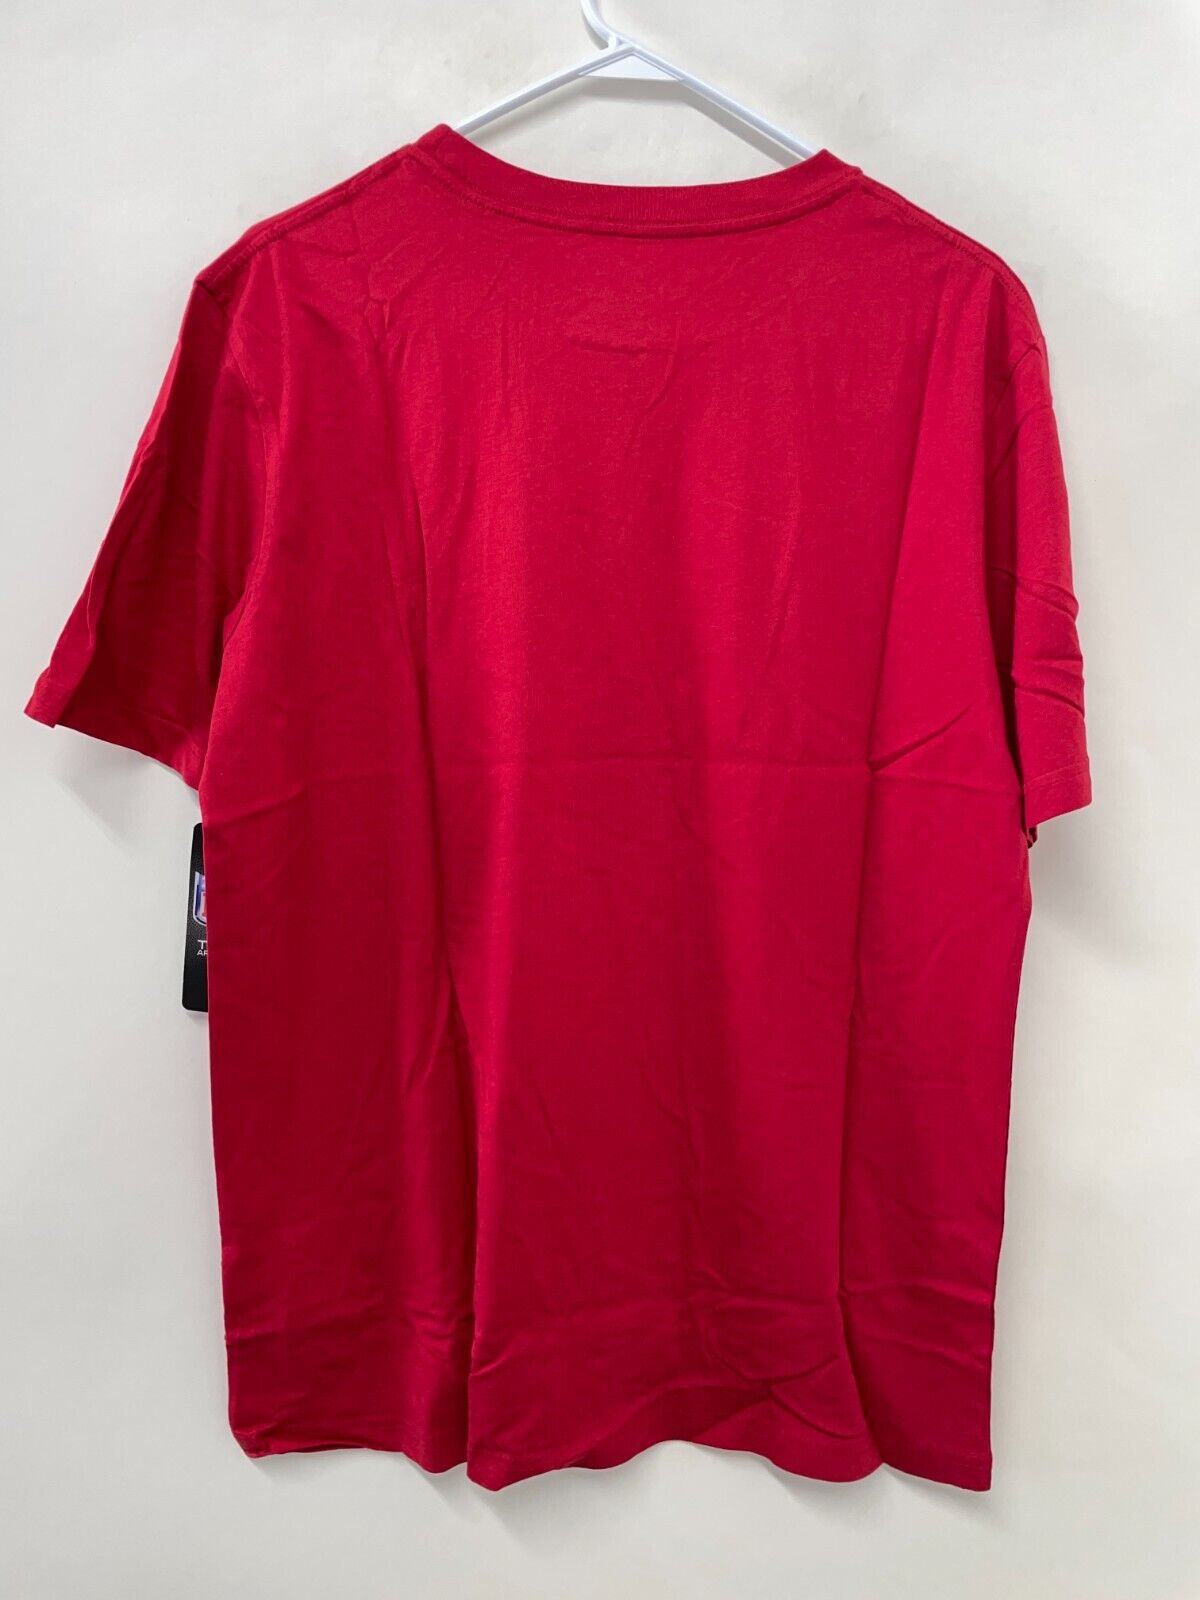 Fanatics Men's XL San Francisco 49ers Speed & Agility T-Shirt Scarlet Red NWT